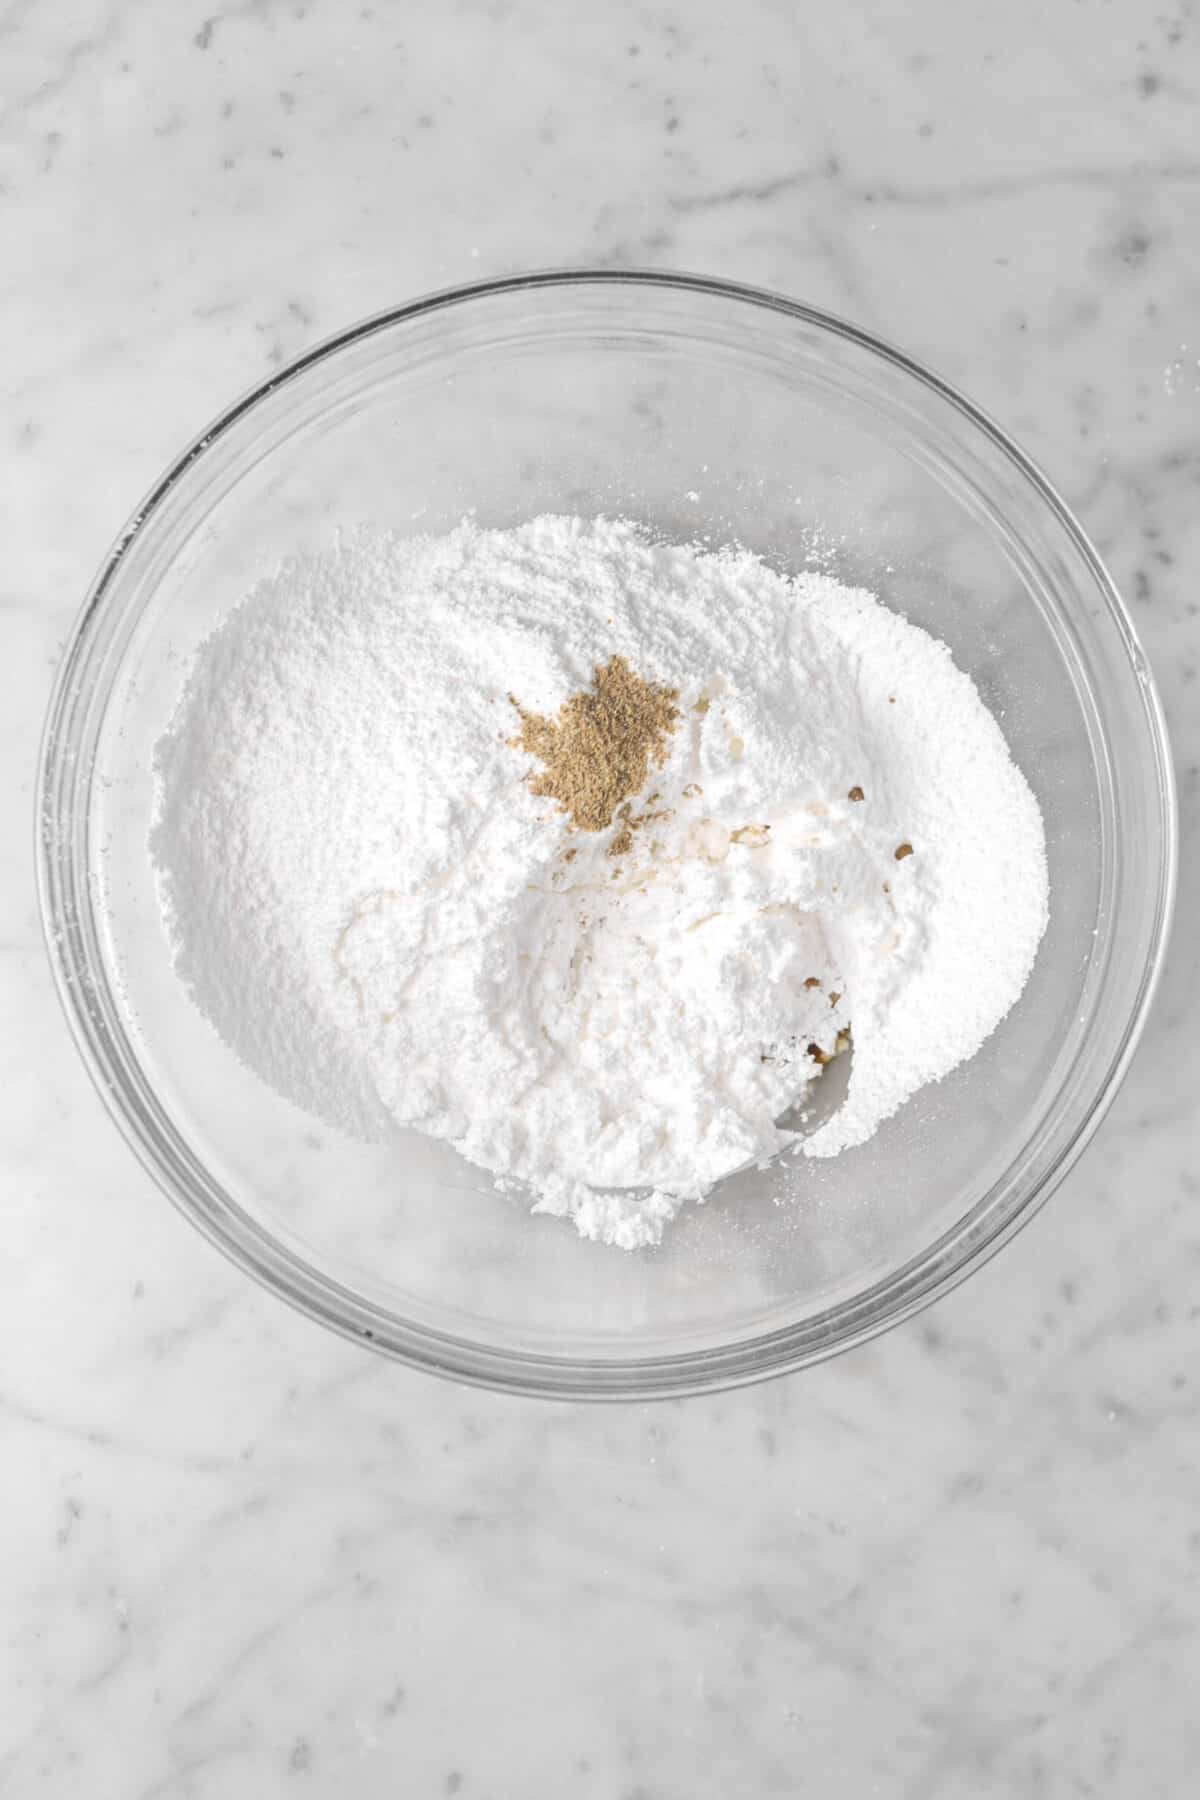 powdered sugar, milk, vanilla, and cardamom in a glass bowl